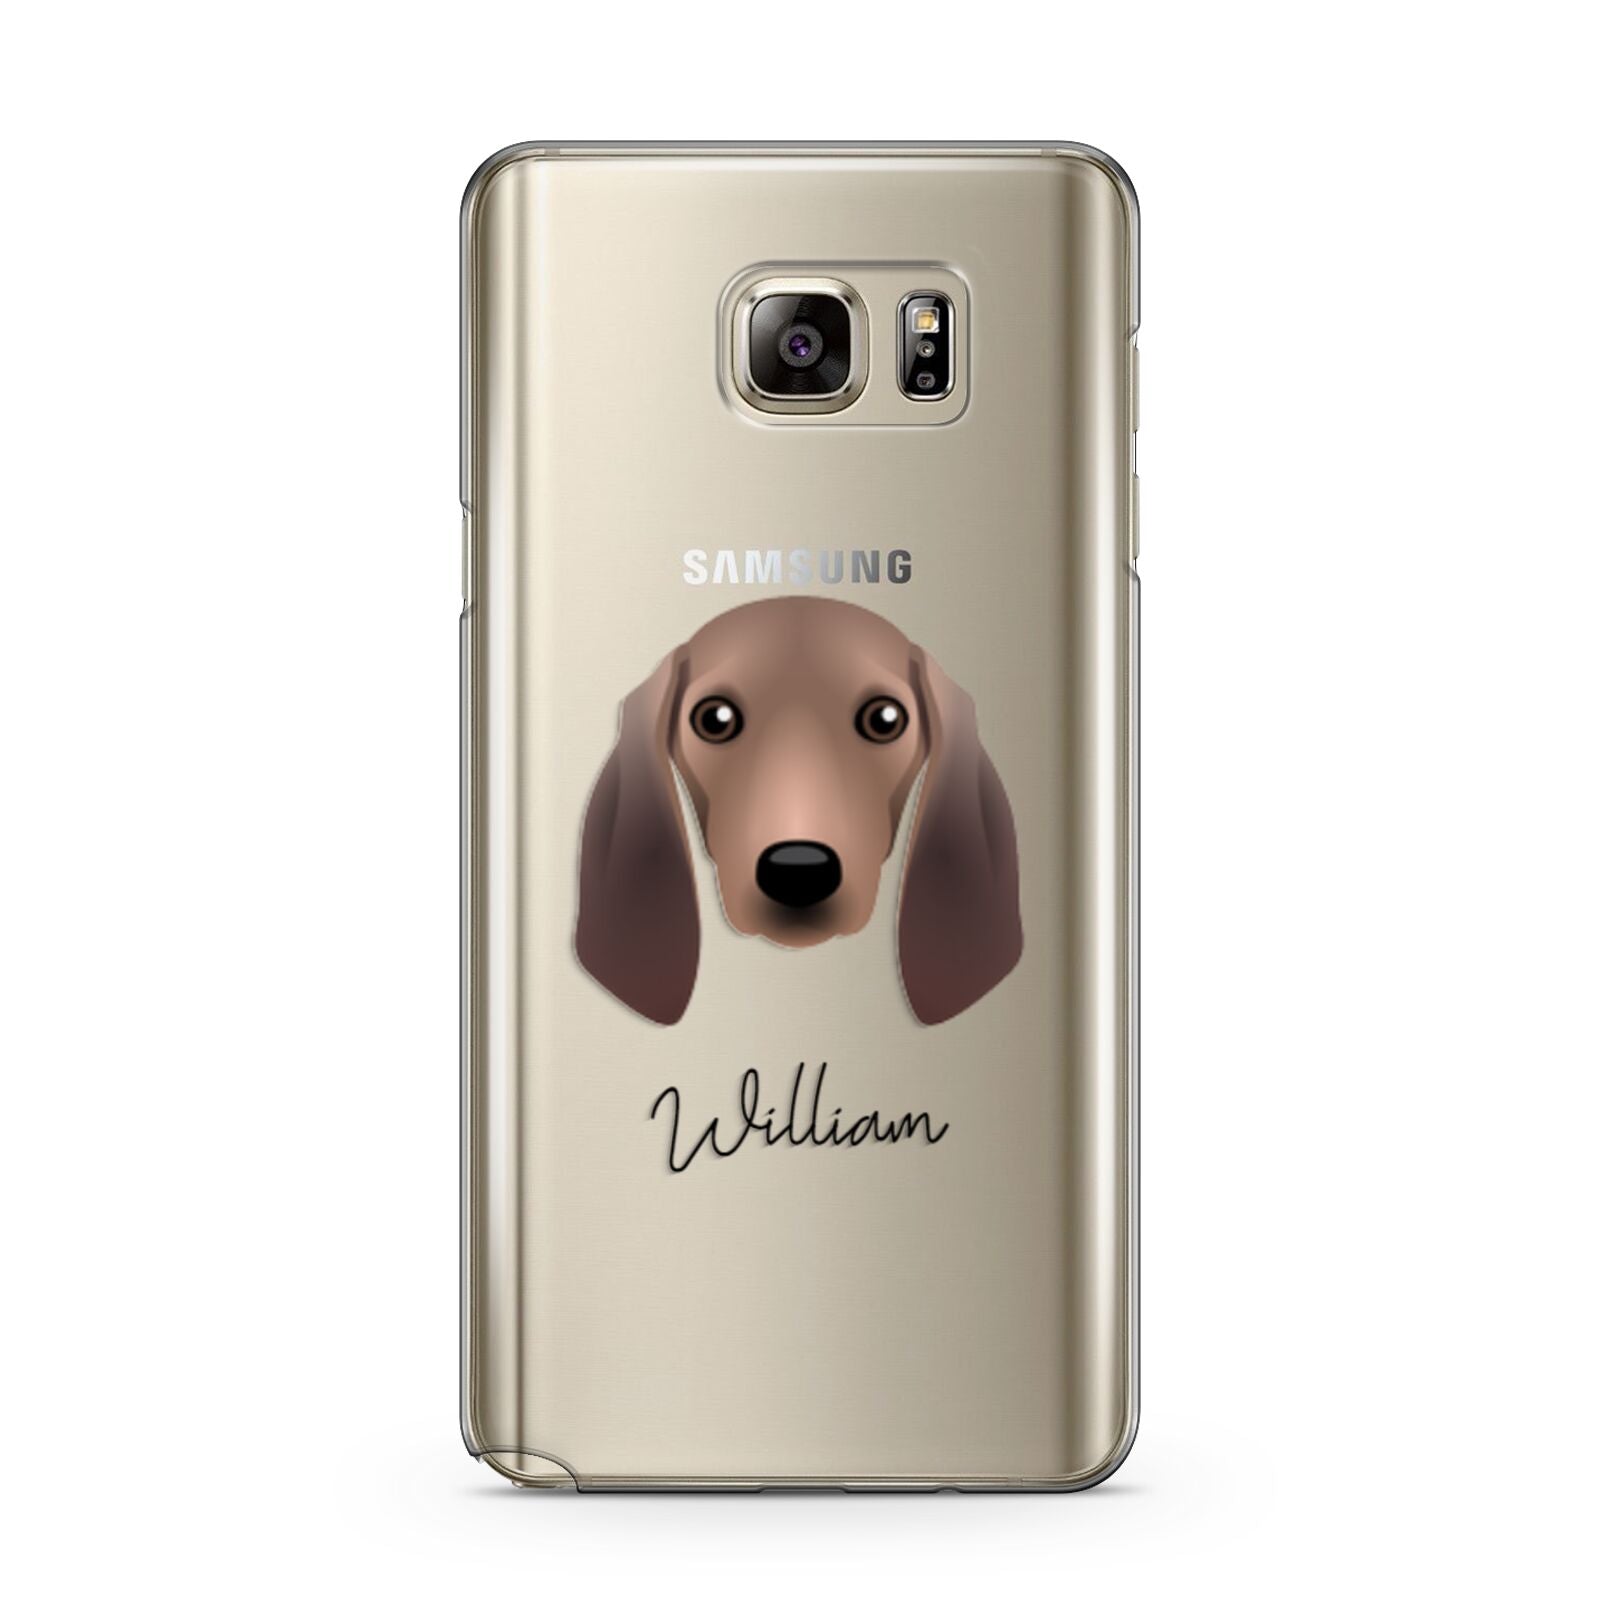 Segugio Italiano Personalised Samsung Galaxy Note 5 Case